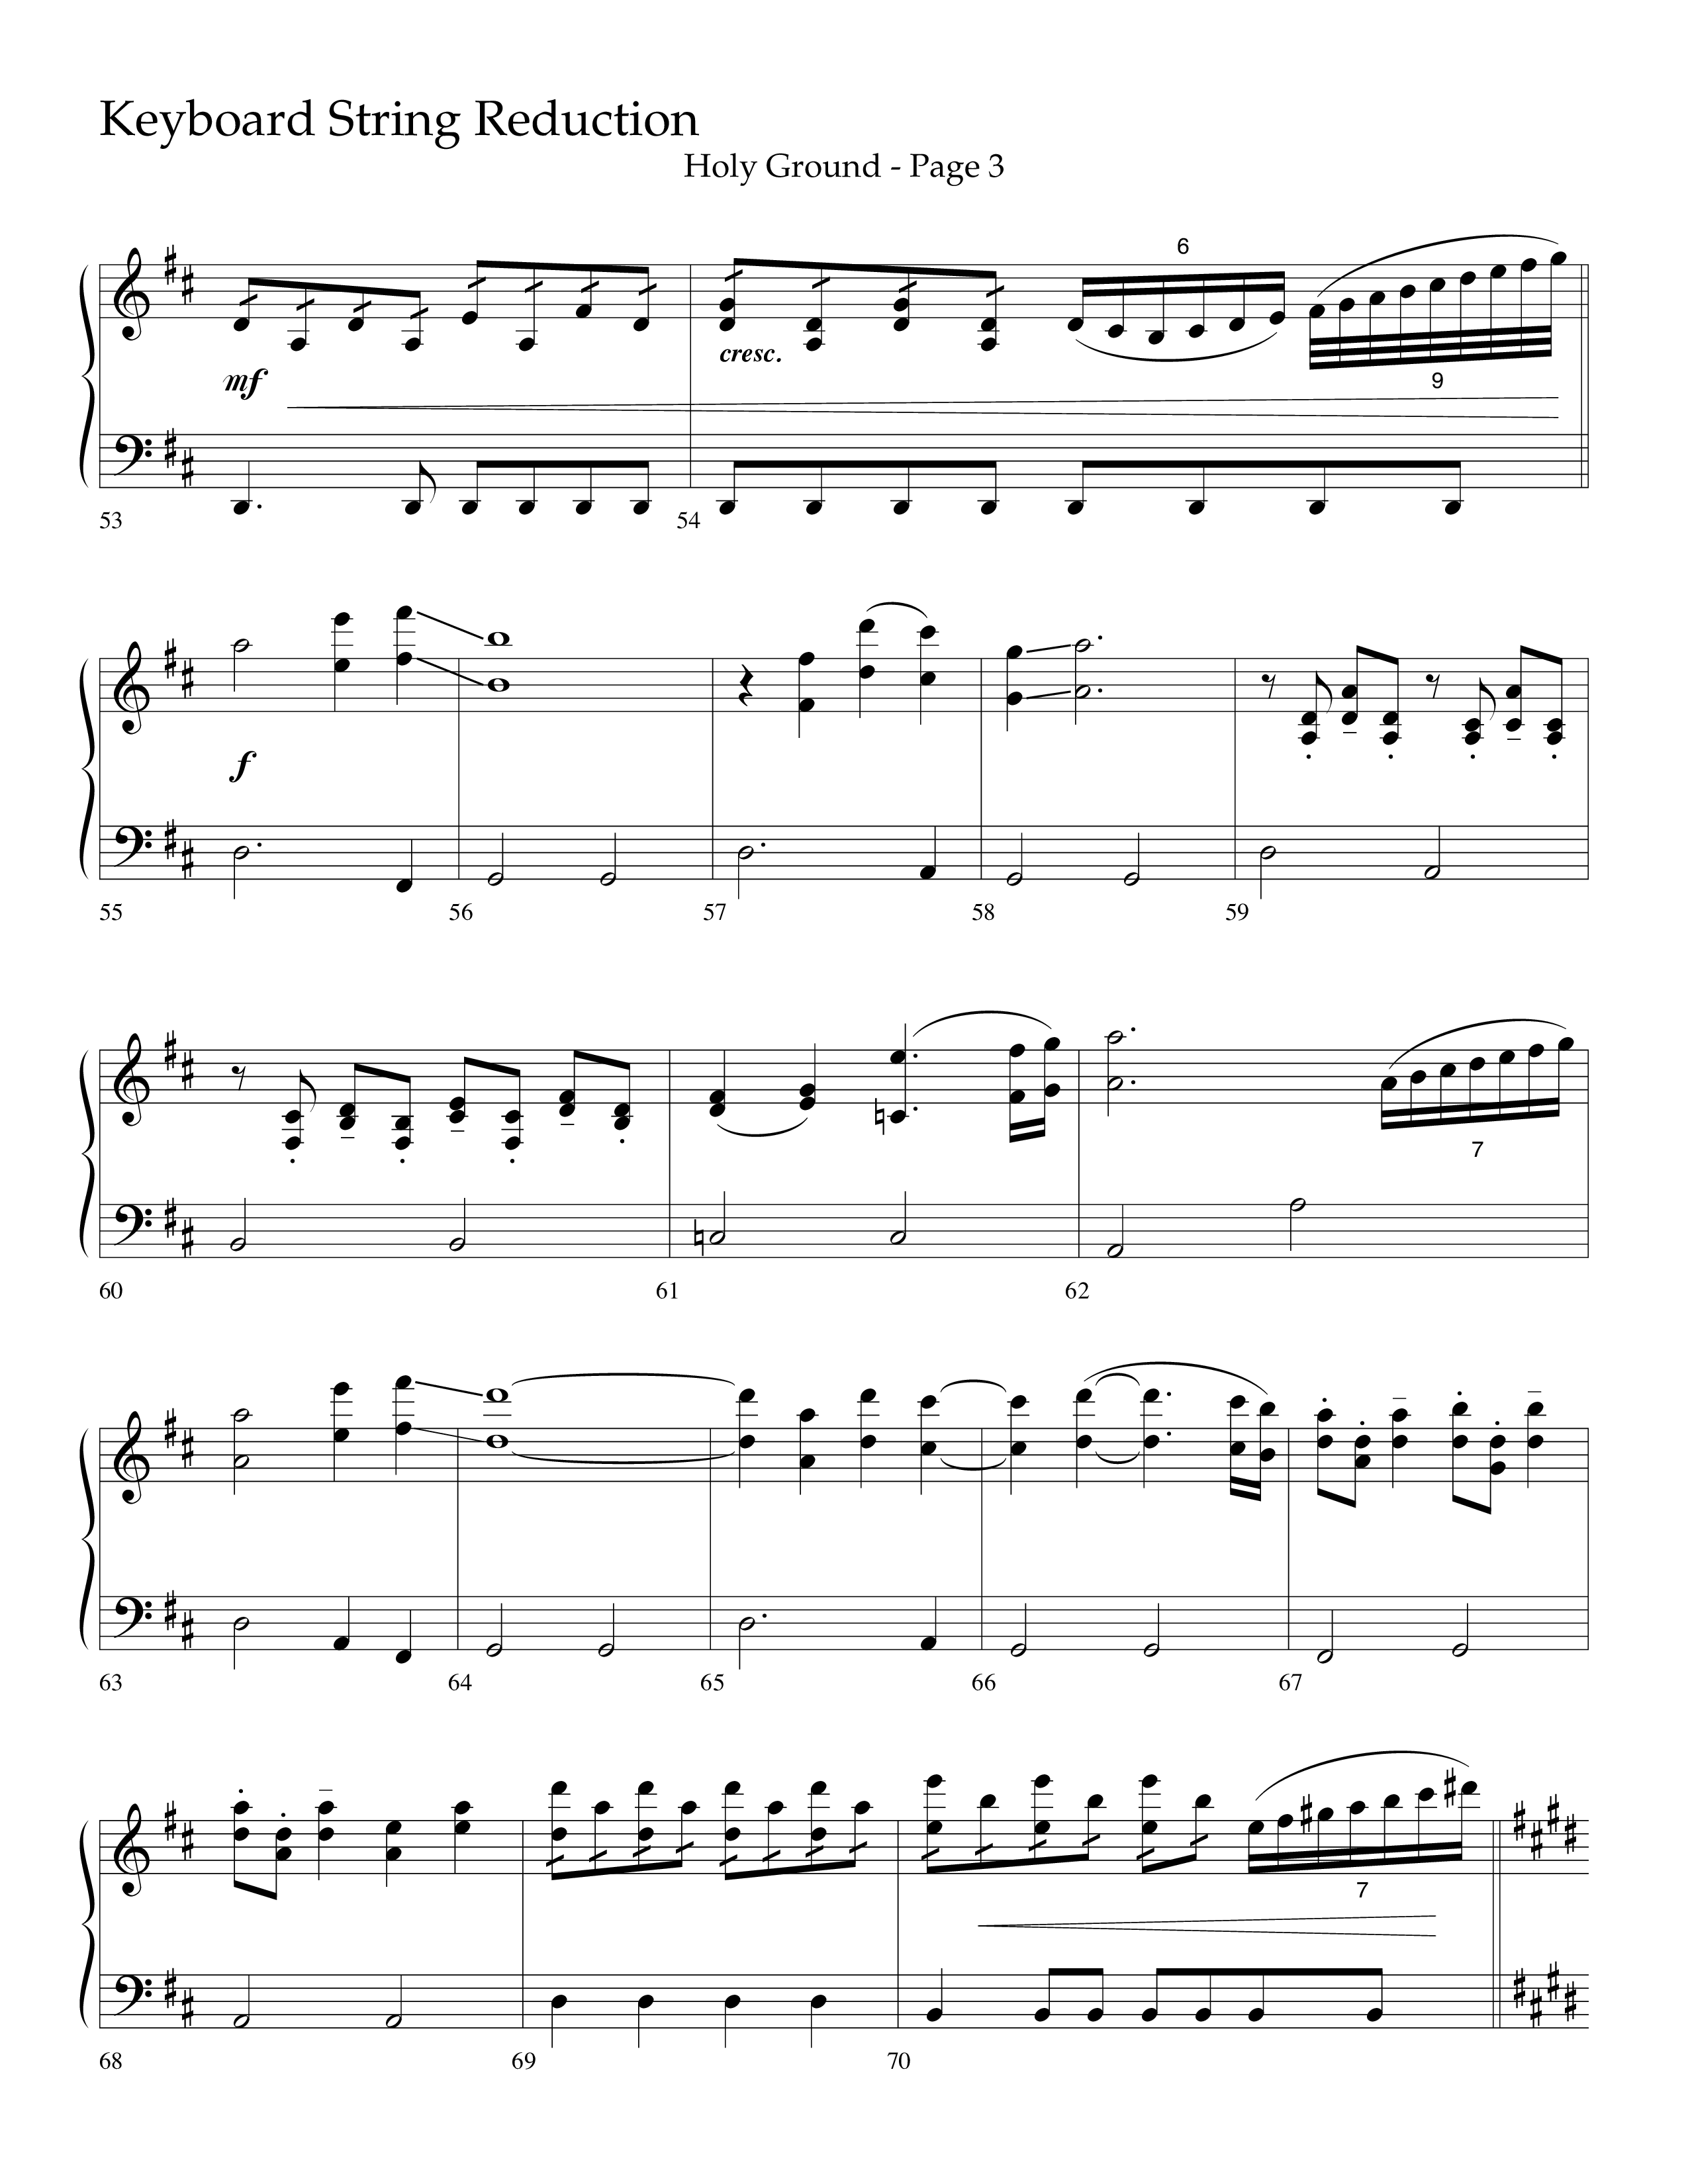 Holy Ground (Choral Anthem SATB) String Reduction (Lifeway Choral / Arr. Bradley Knight)